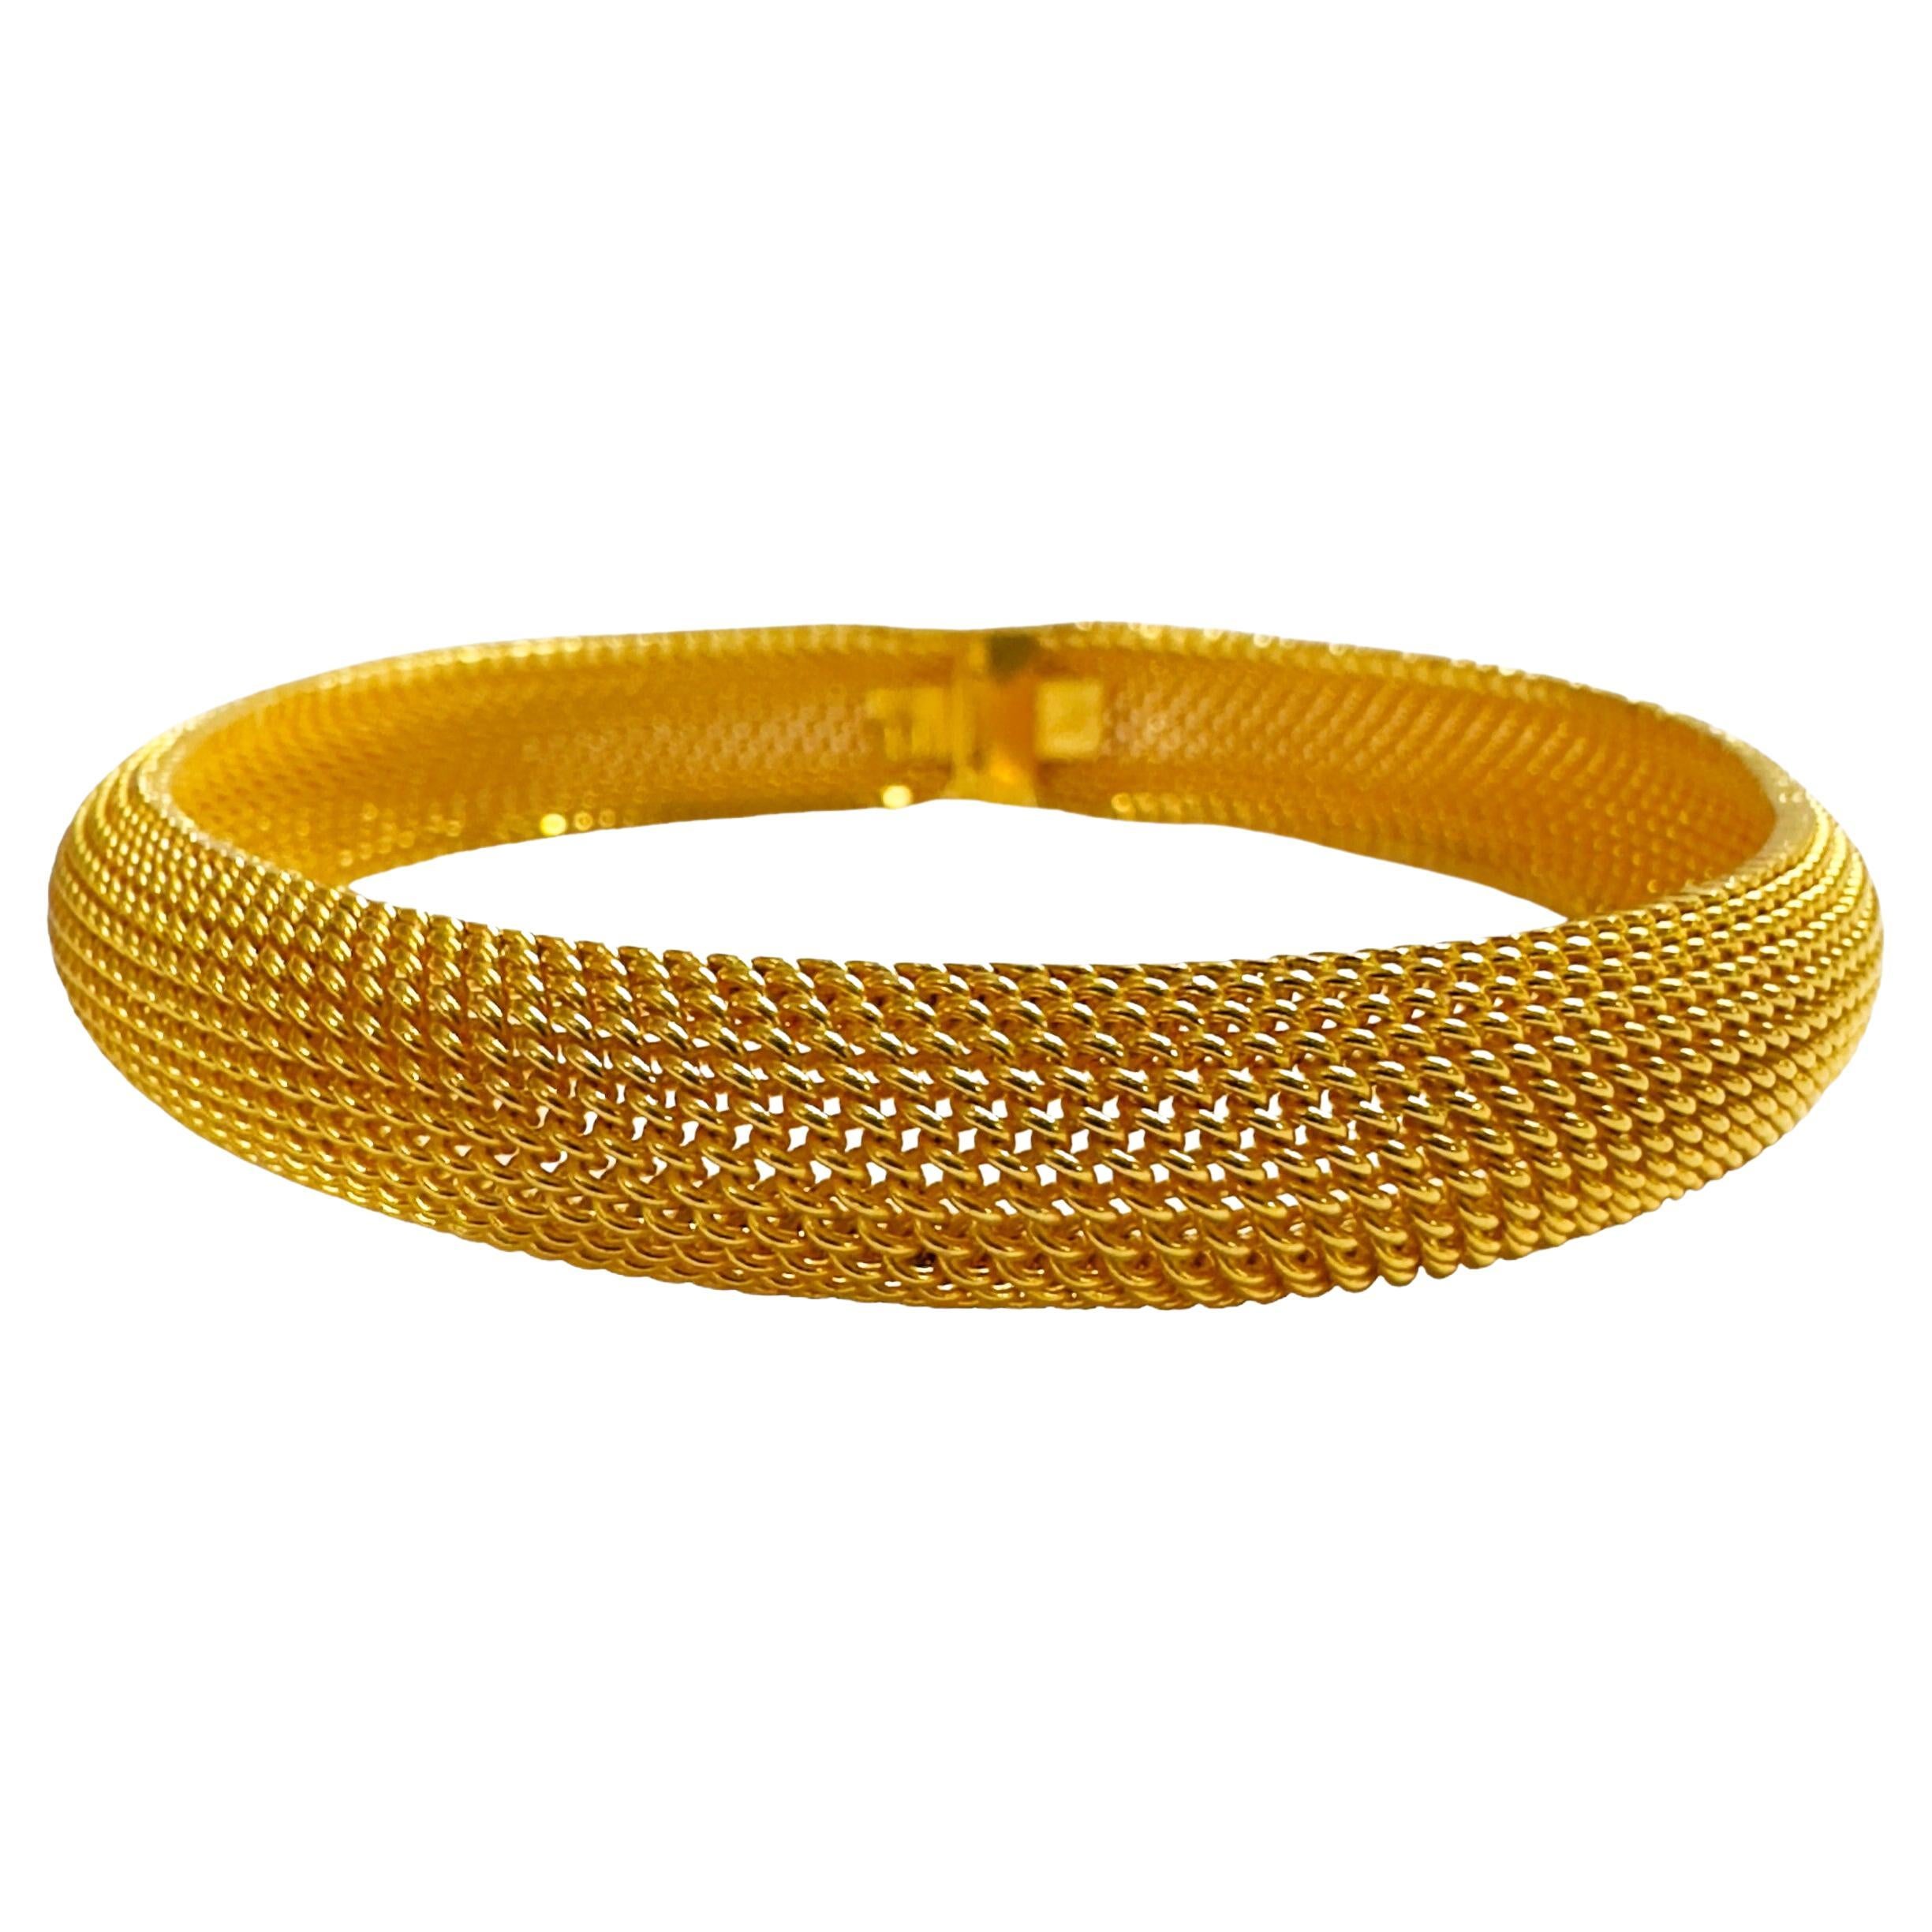 Stunning 22K Yellow Gold Woven Caviar Bracelet 30.59 Grams